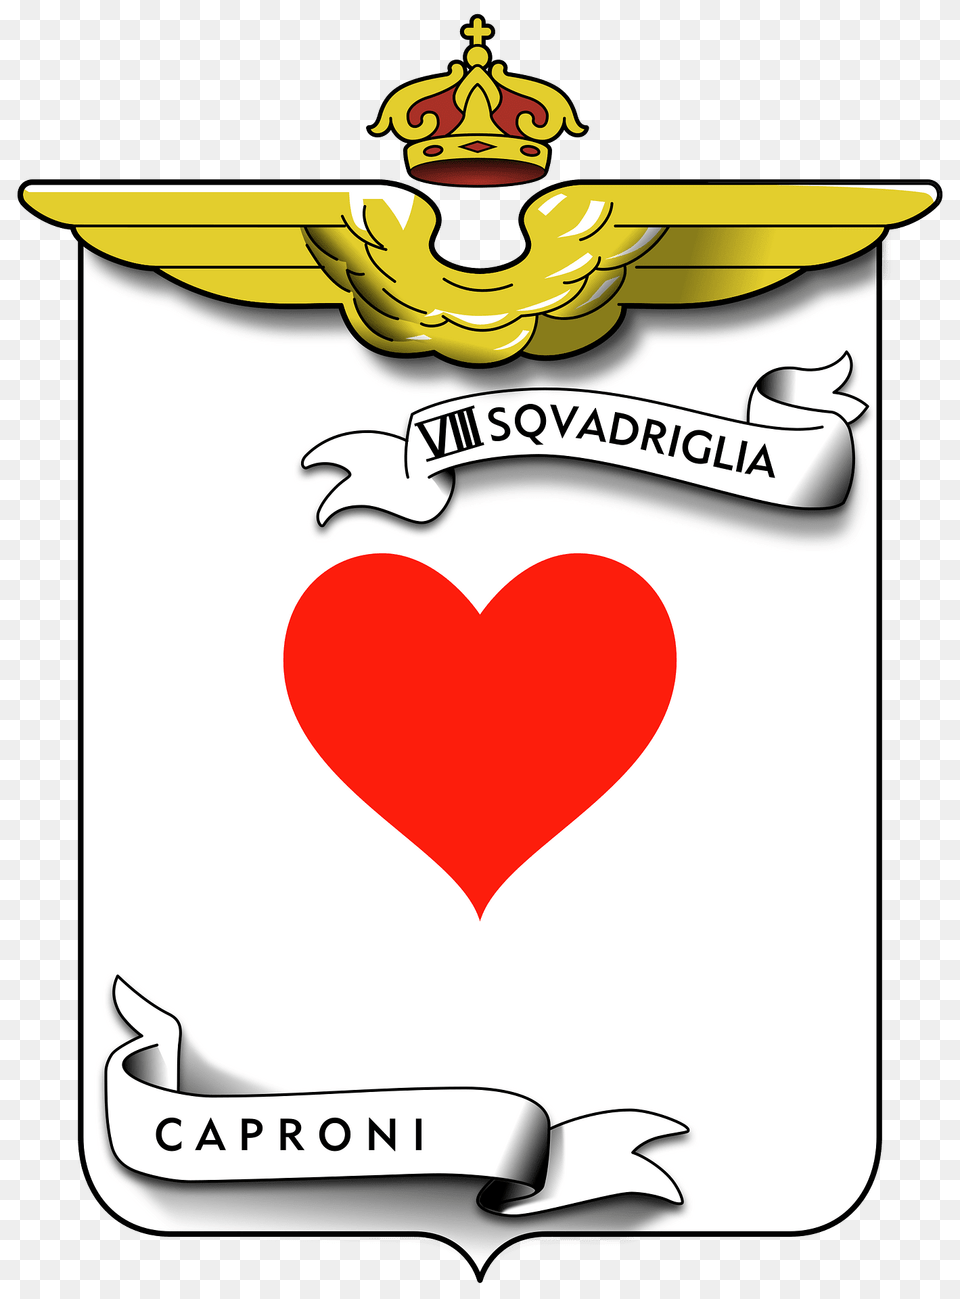 Coa Viii Squadriglia Caproni Heart Clipart, Logo, Symbol, Smoke Pipe, Dynamite Png Image